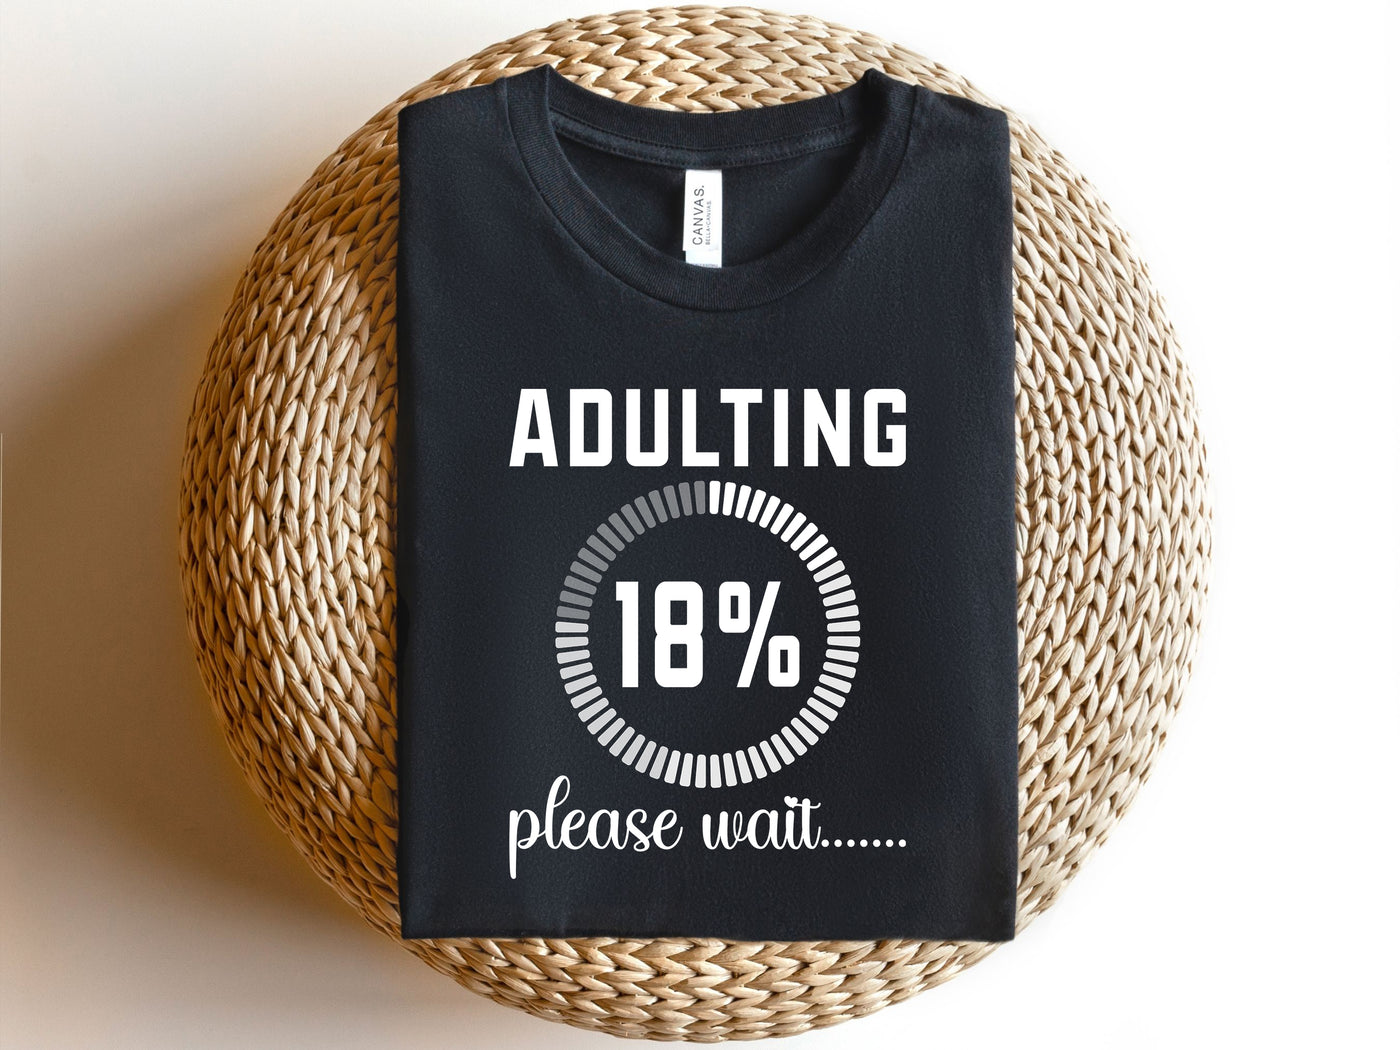 Adulting 18 / Please Wait